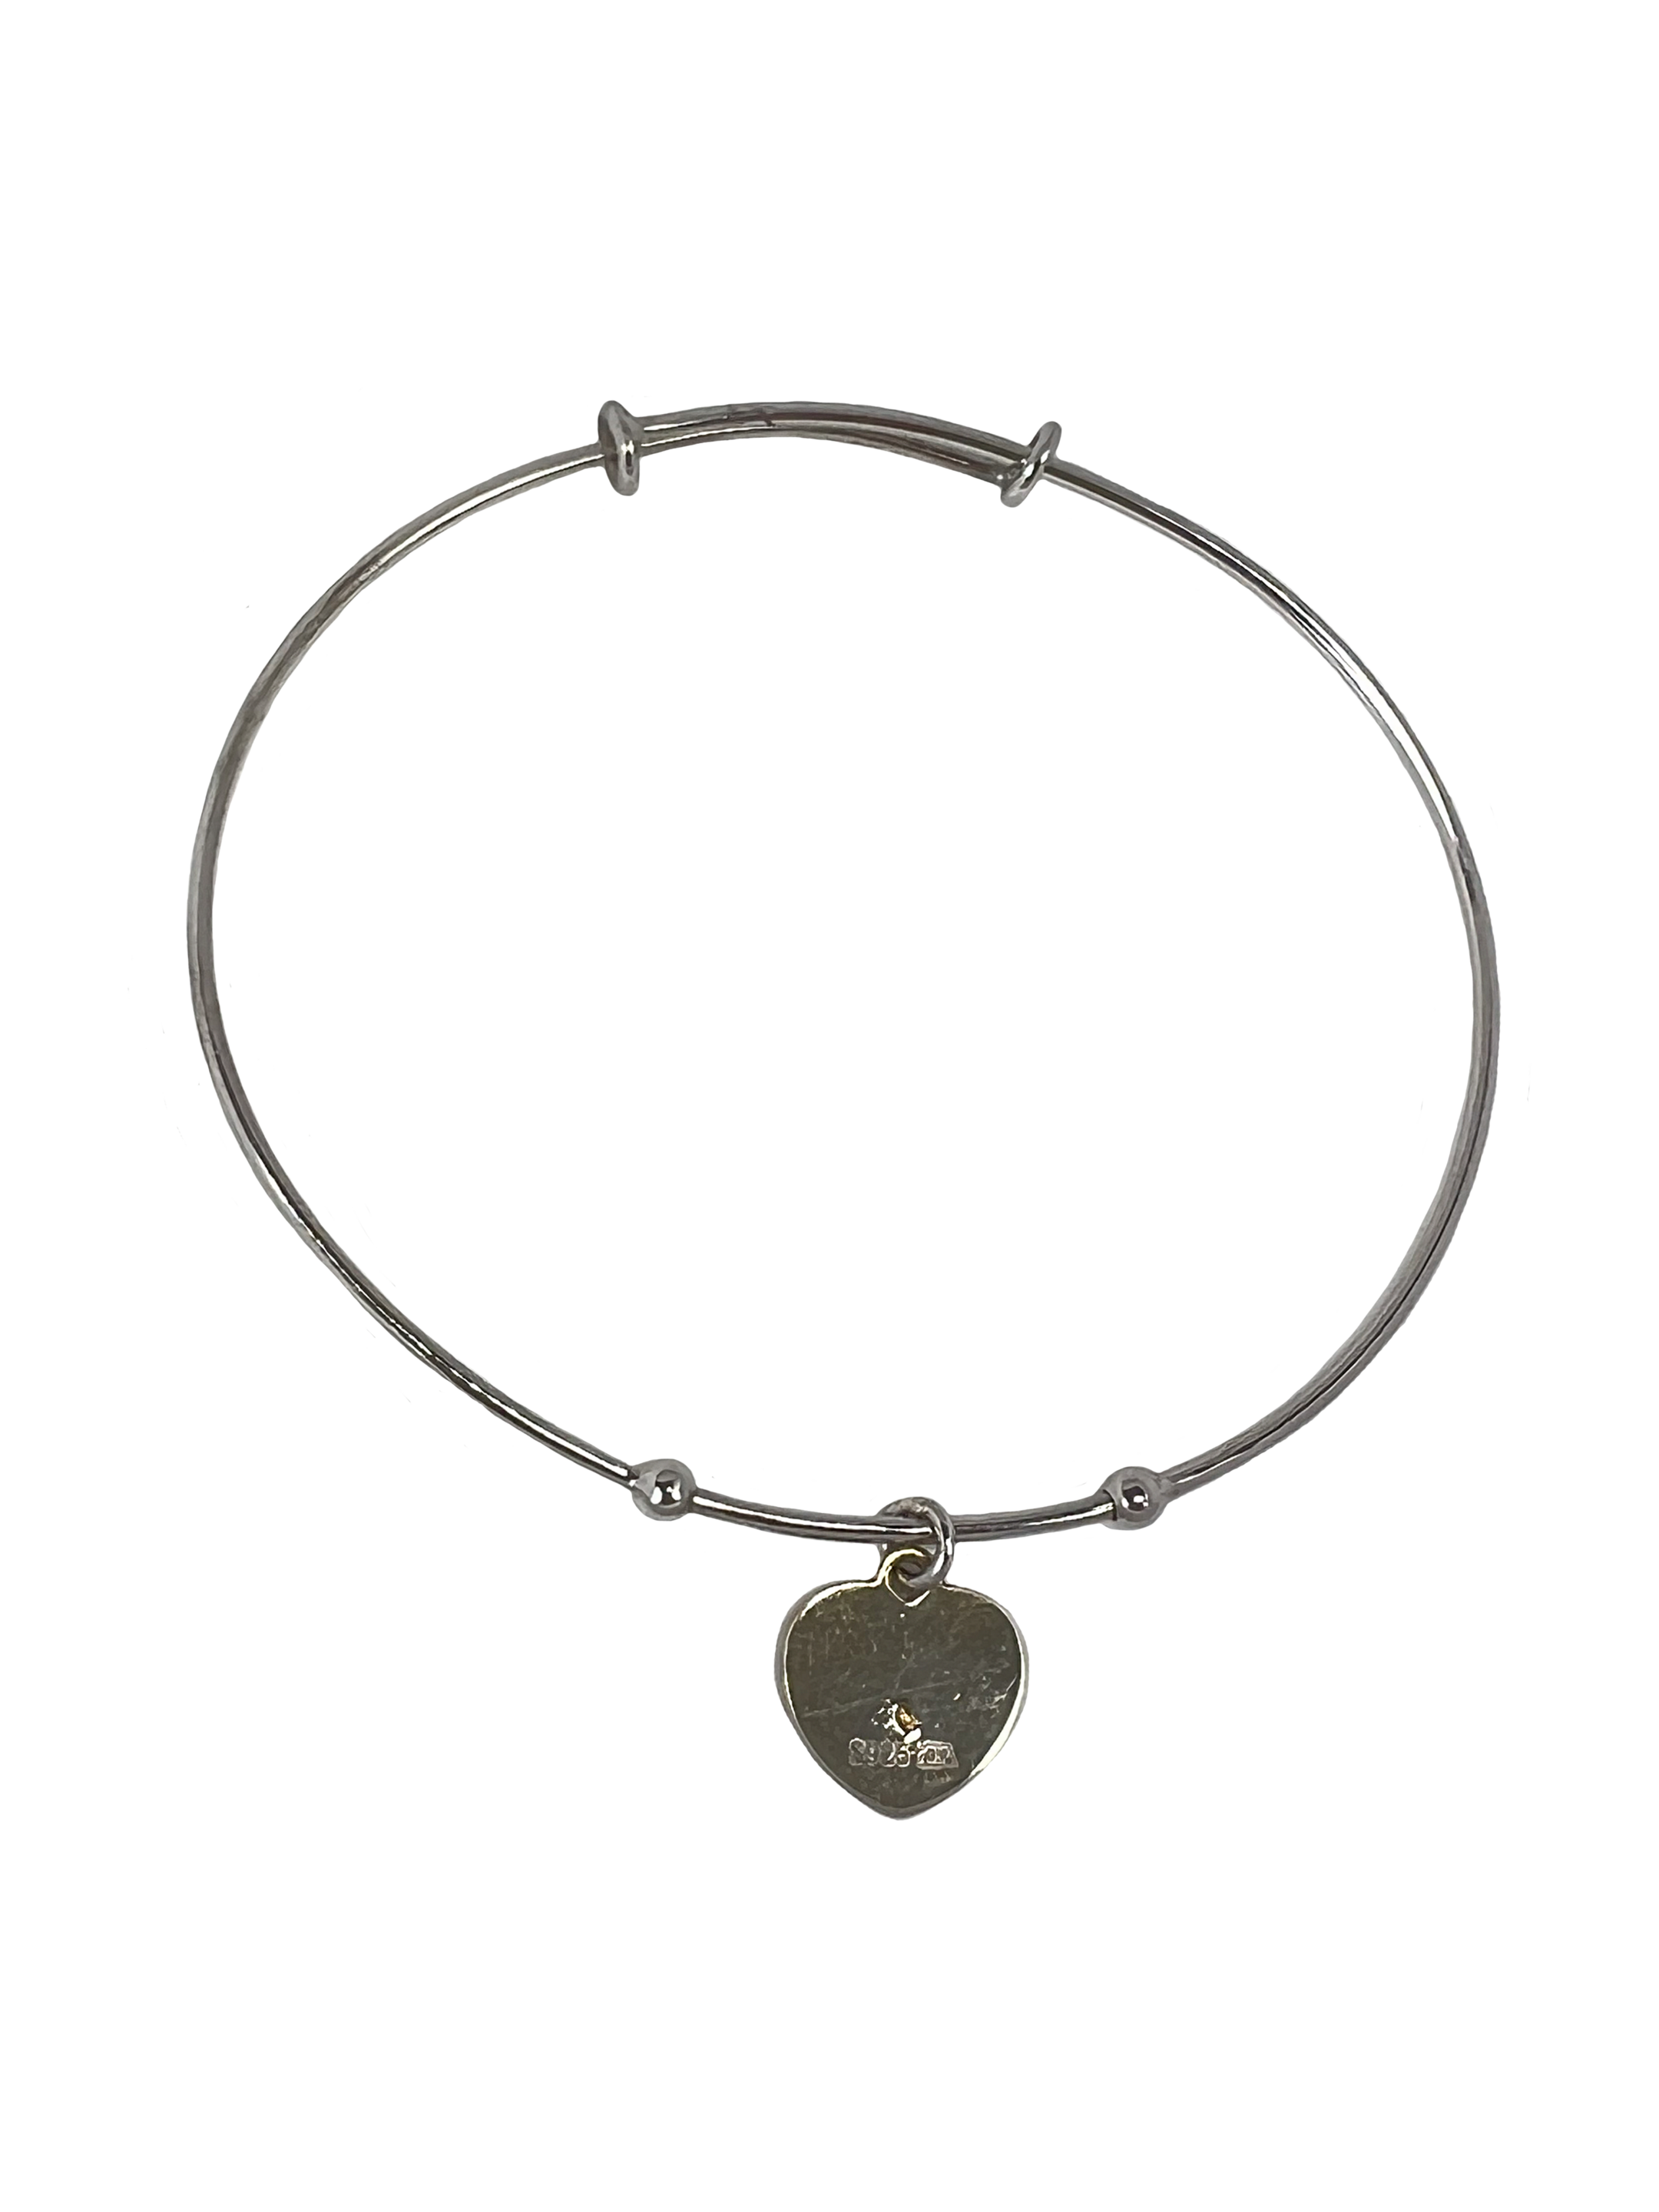 Silver bracelet with a heart pendant